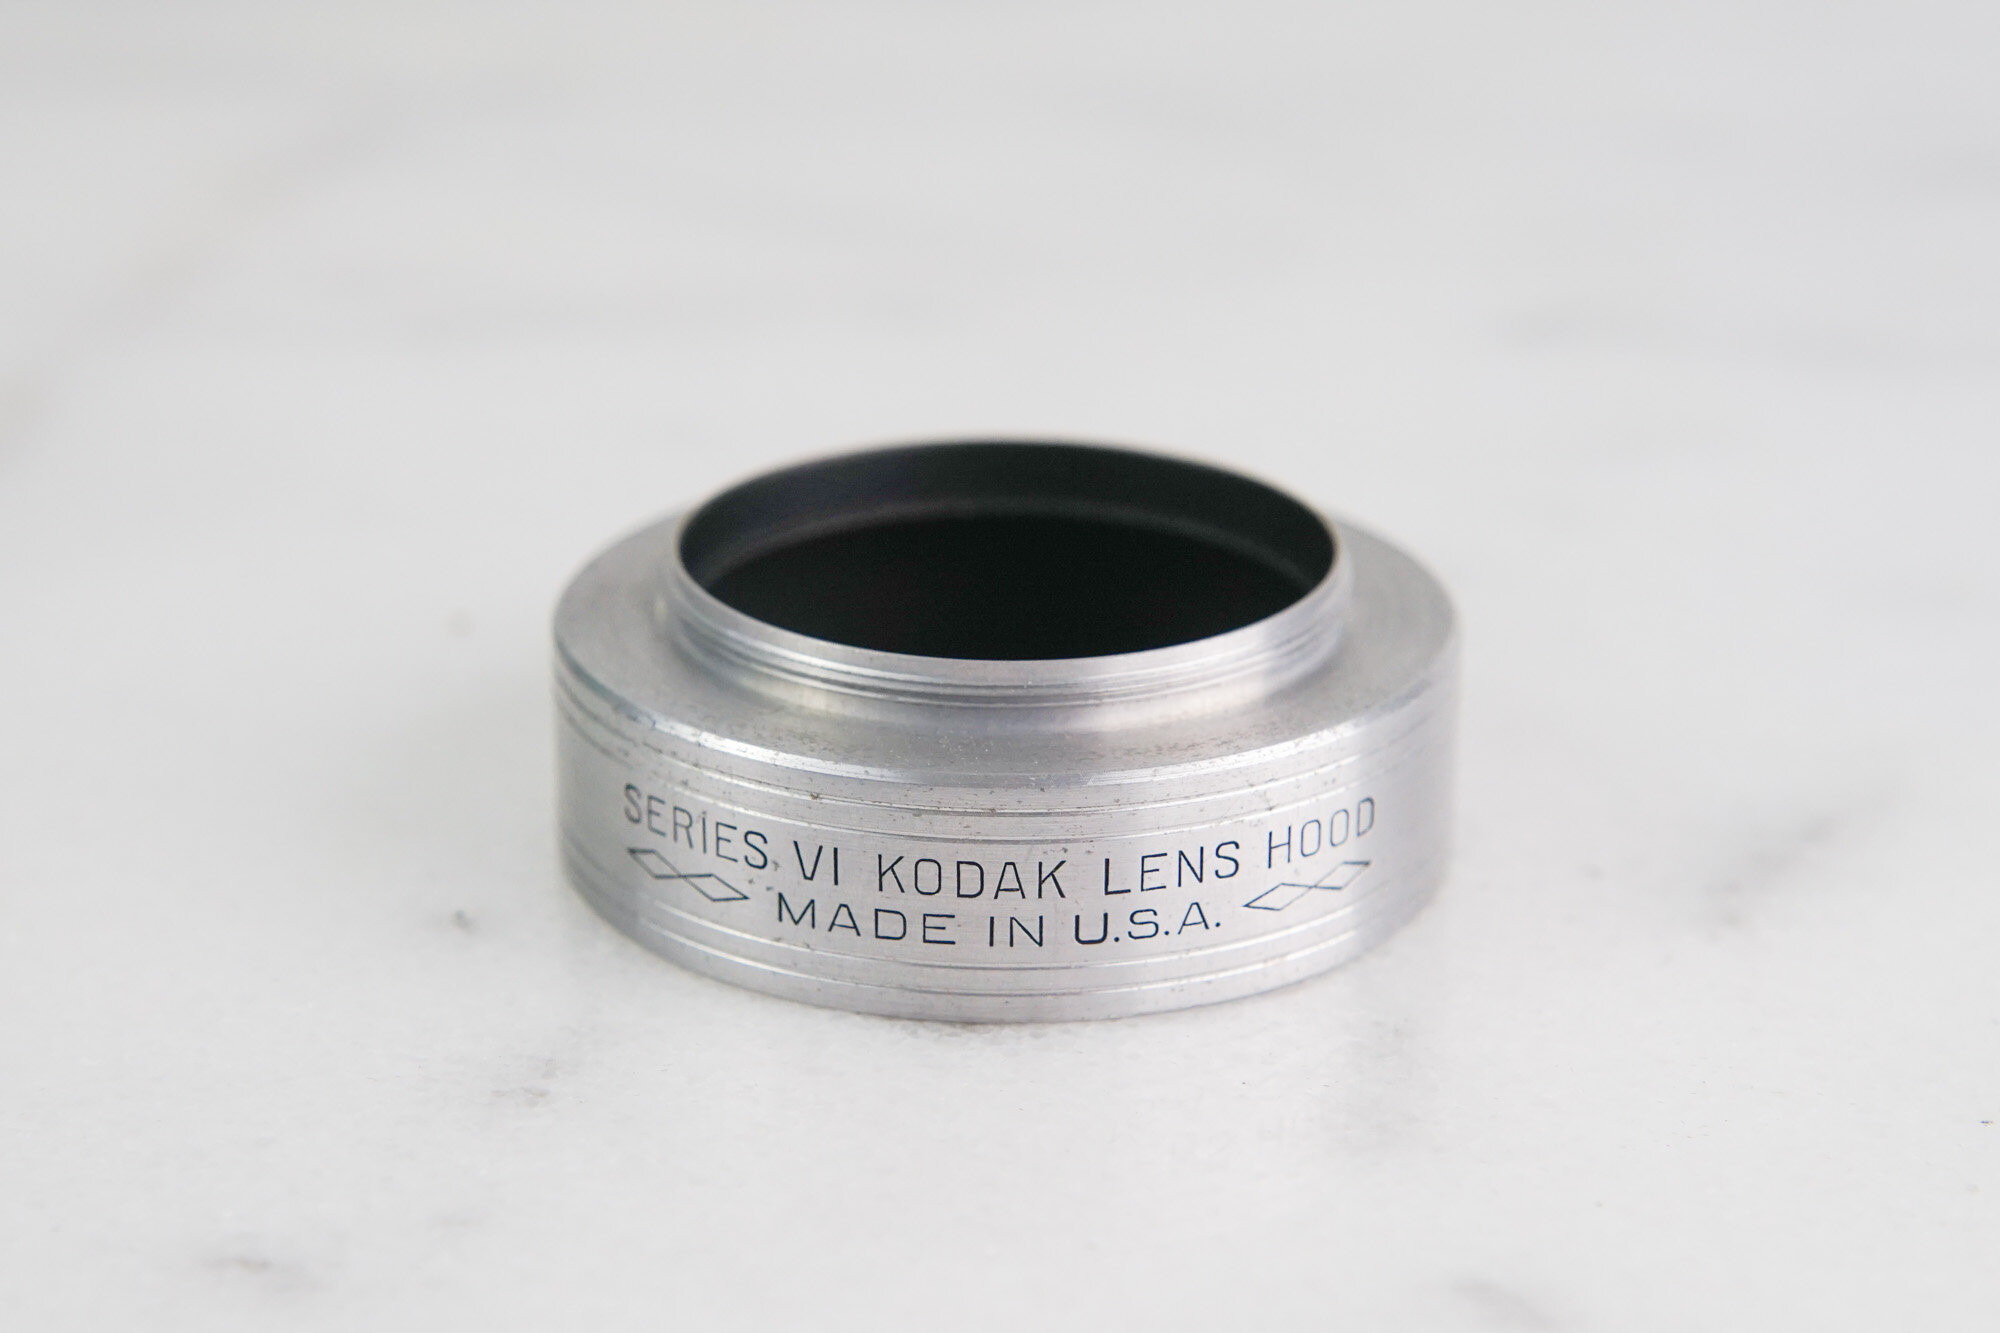 Kodak Series VI metal lens hood Vintage 